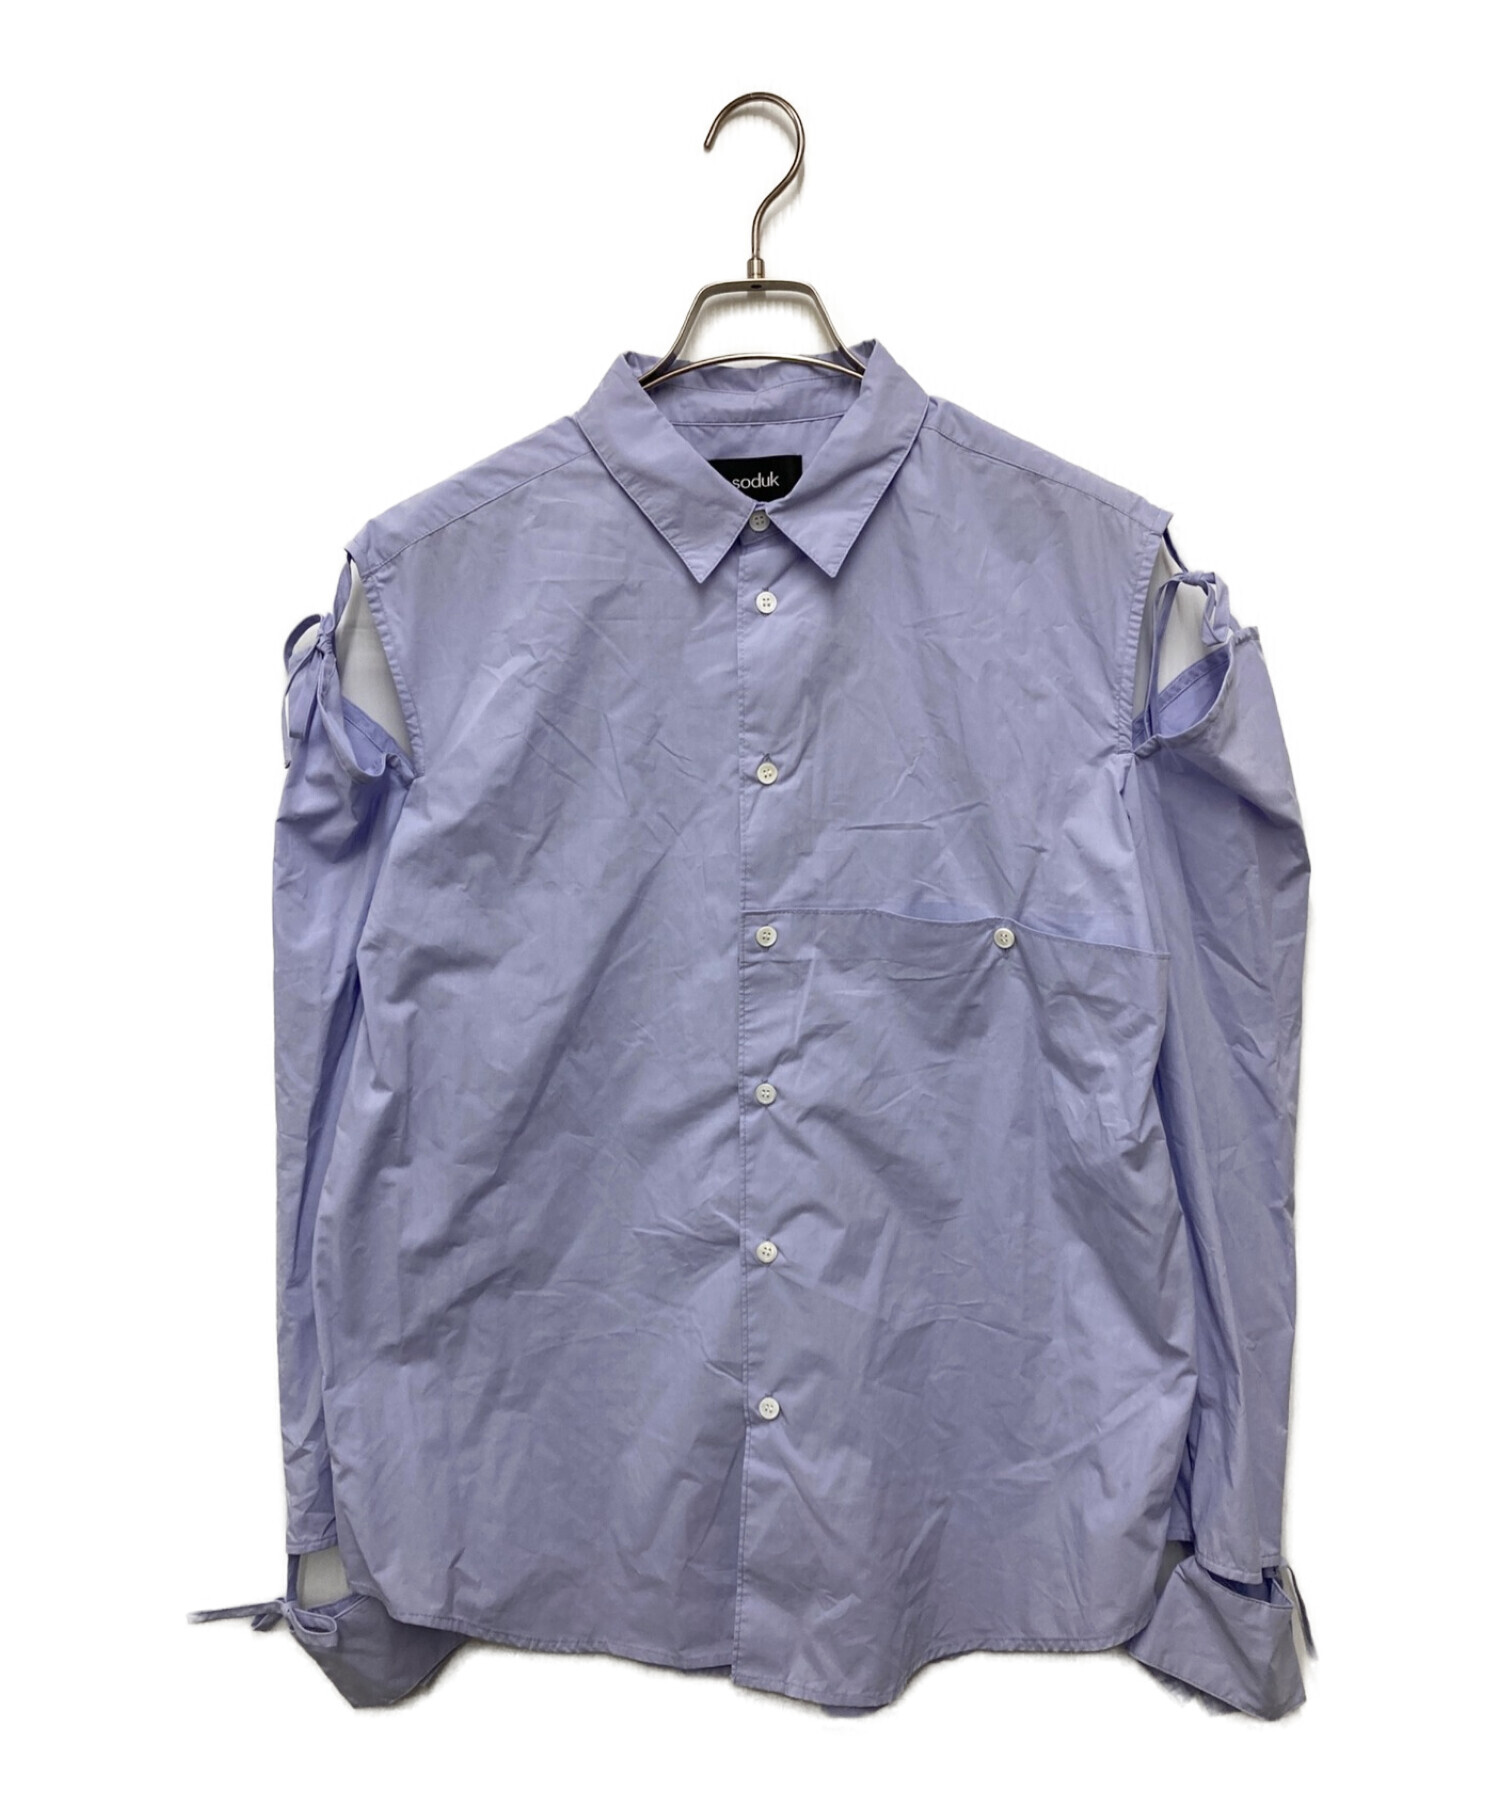 soduk (スドーク) ribbon everywhere shirt デザインシャツ ラベンダー サイズ:なし